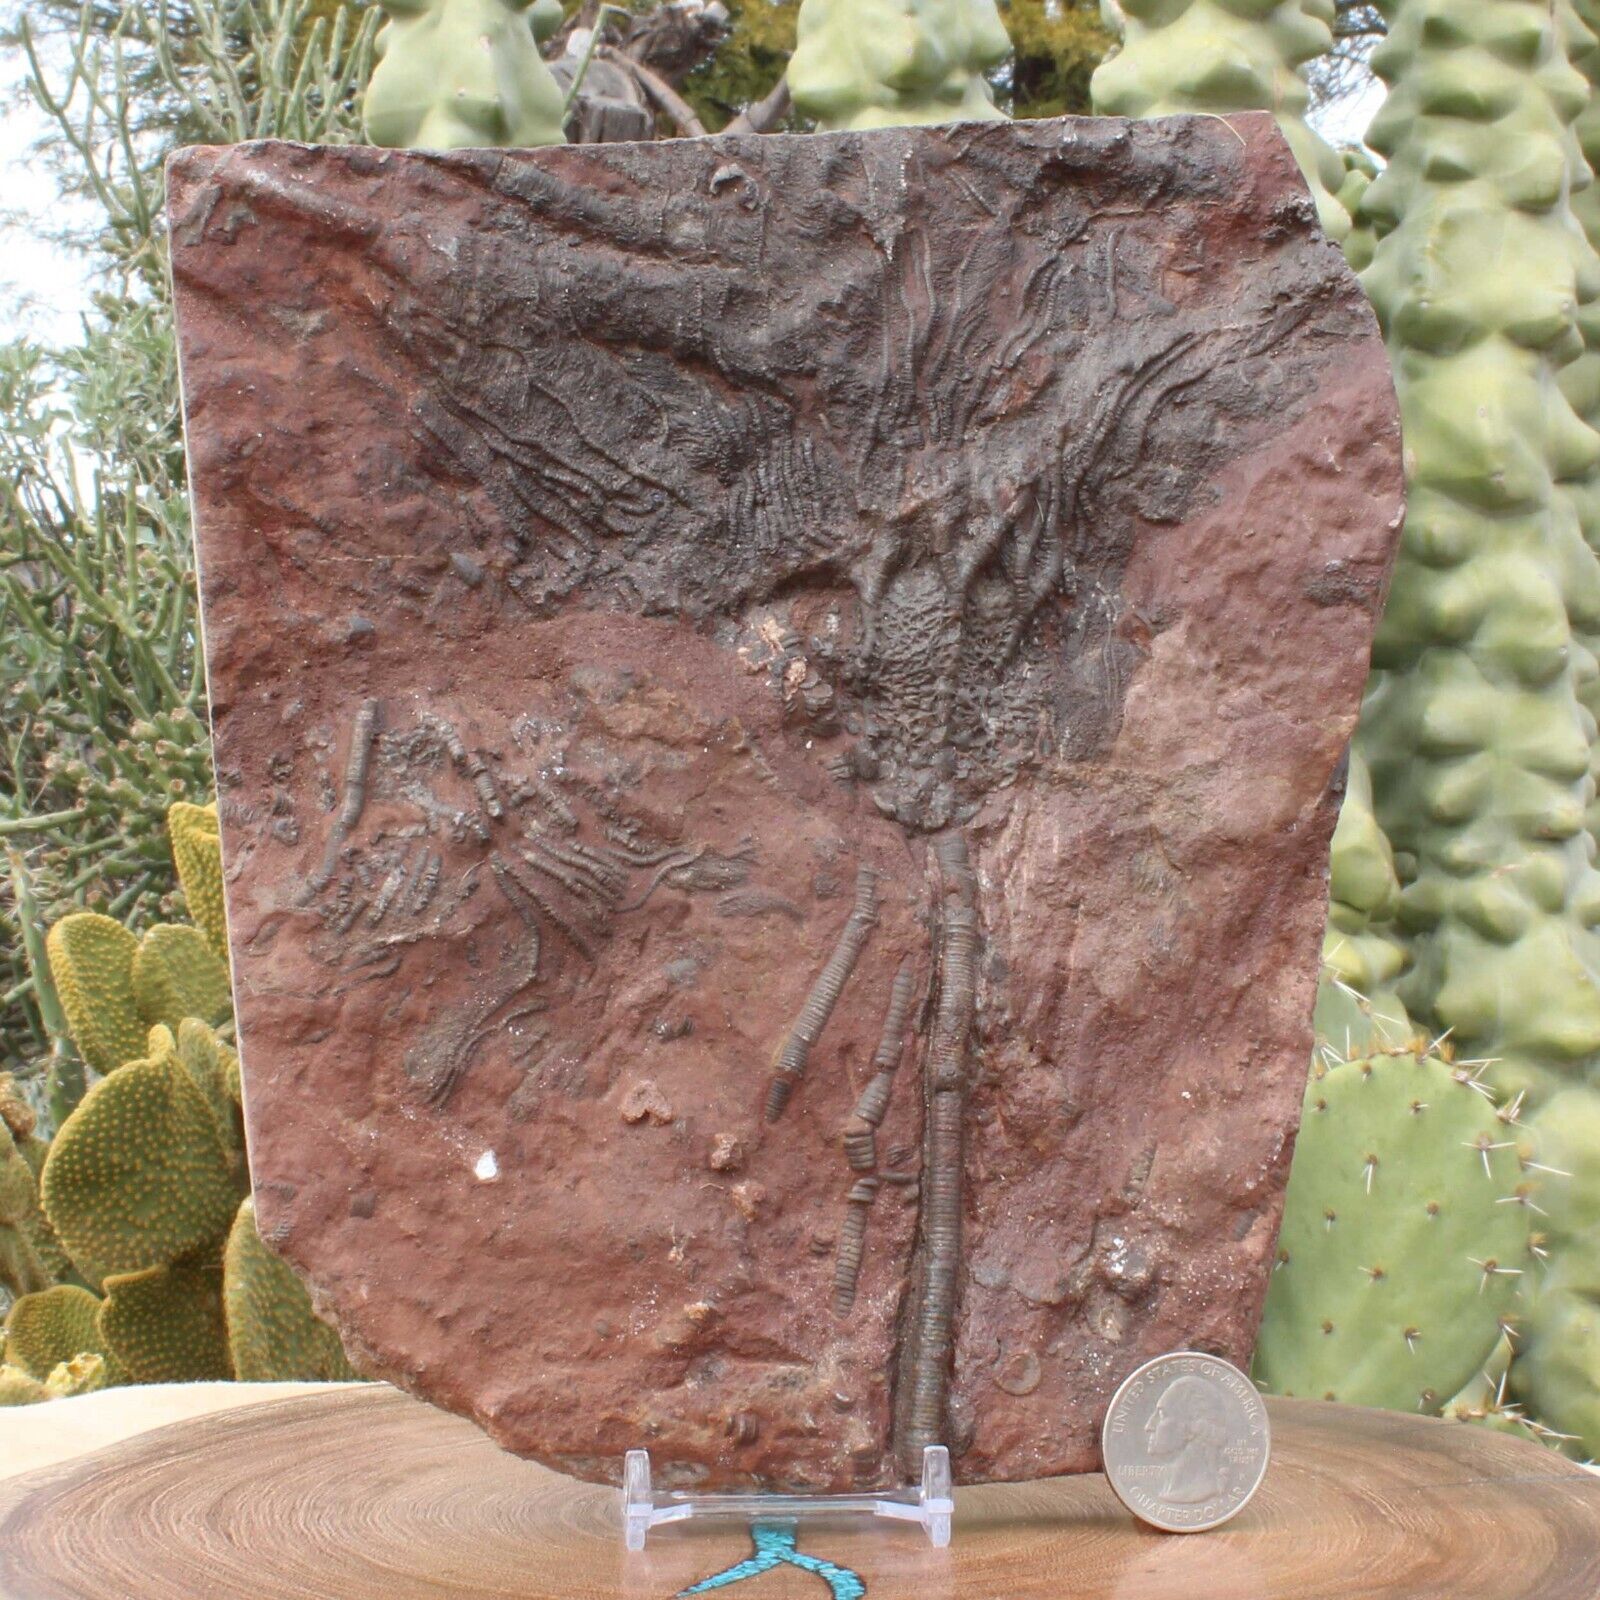 Crinoid Fossil Ocean \'Flower\' Sea Animal Scyphocrinite Great Detail Calyx Plates